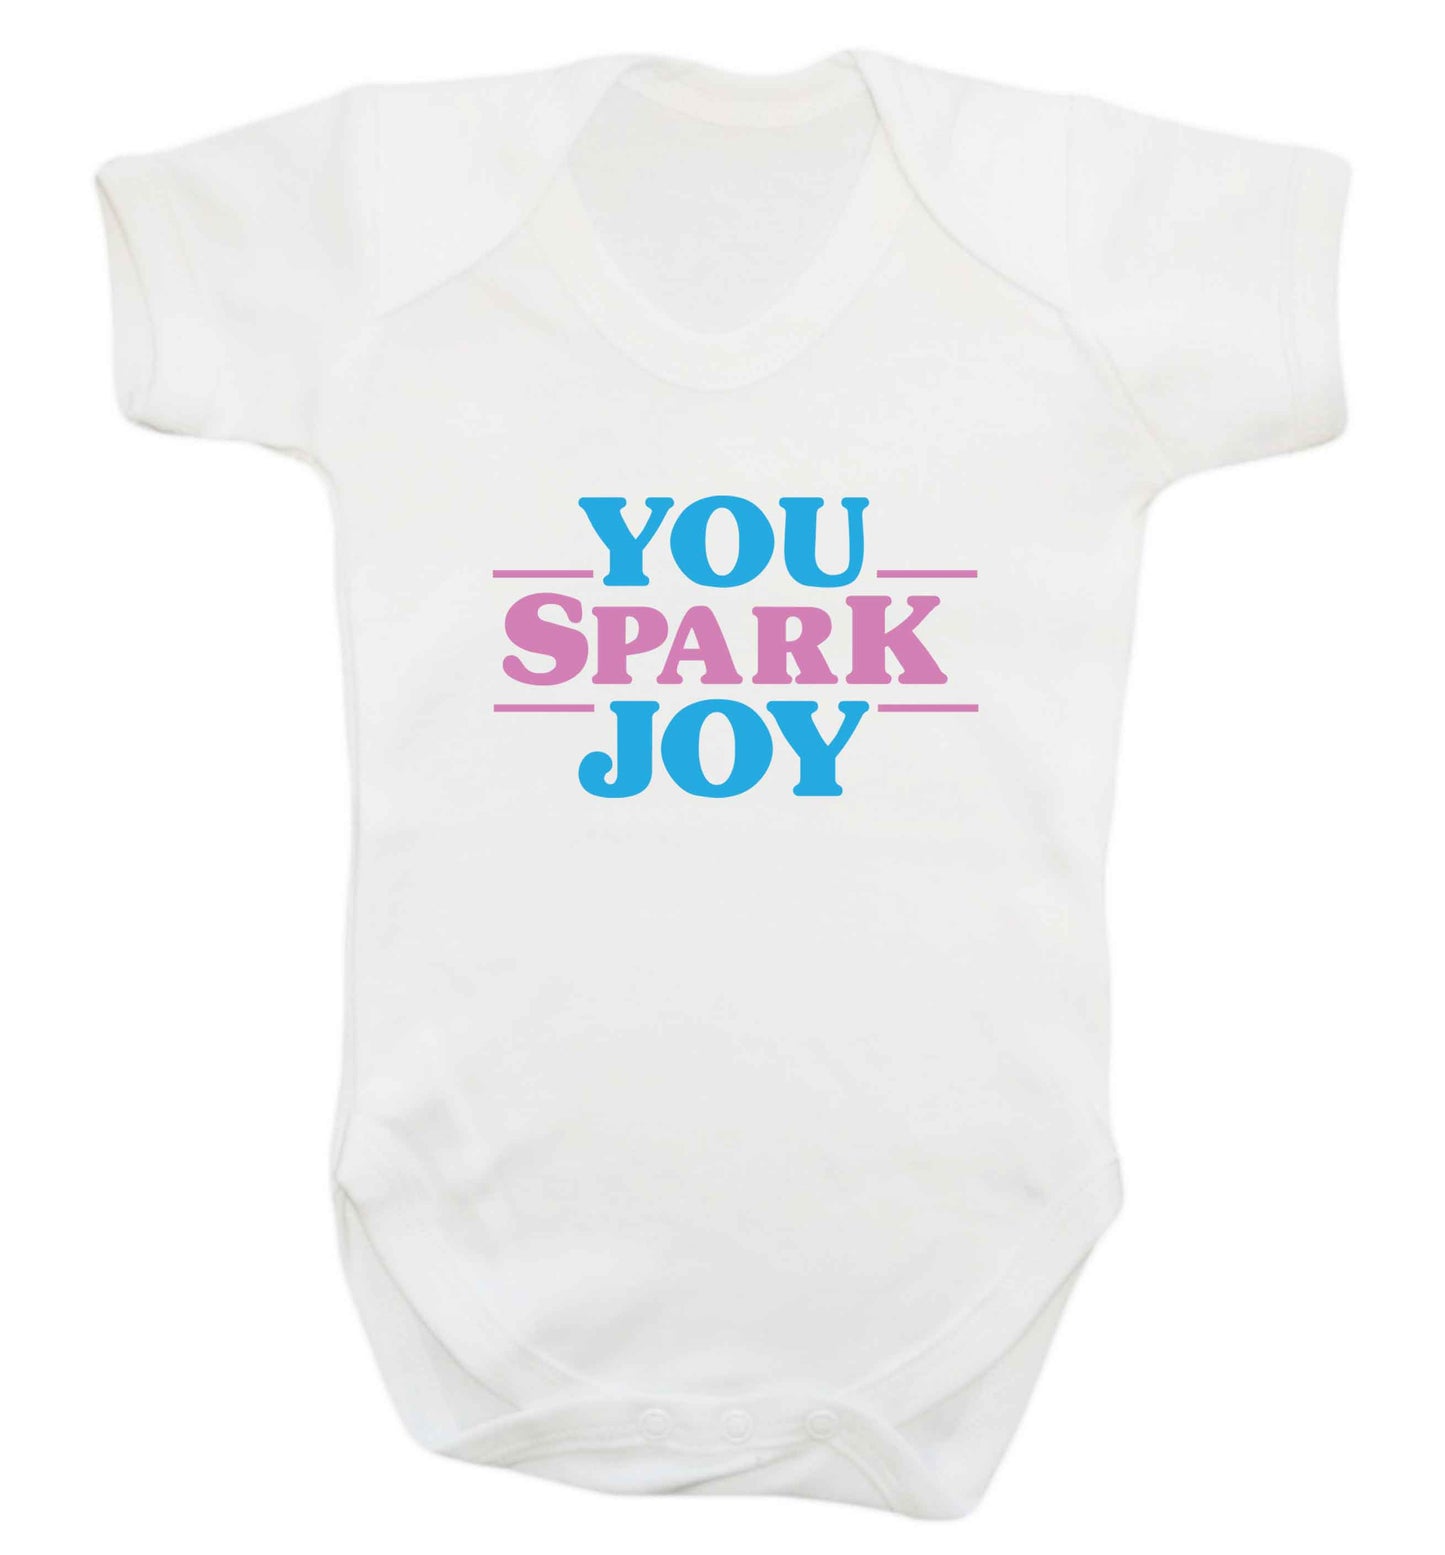 You spark joy baby vest white 18-24 months